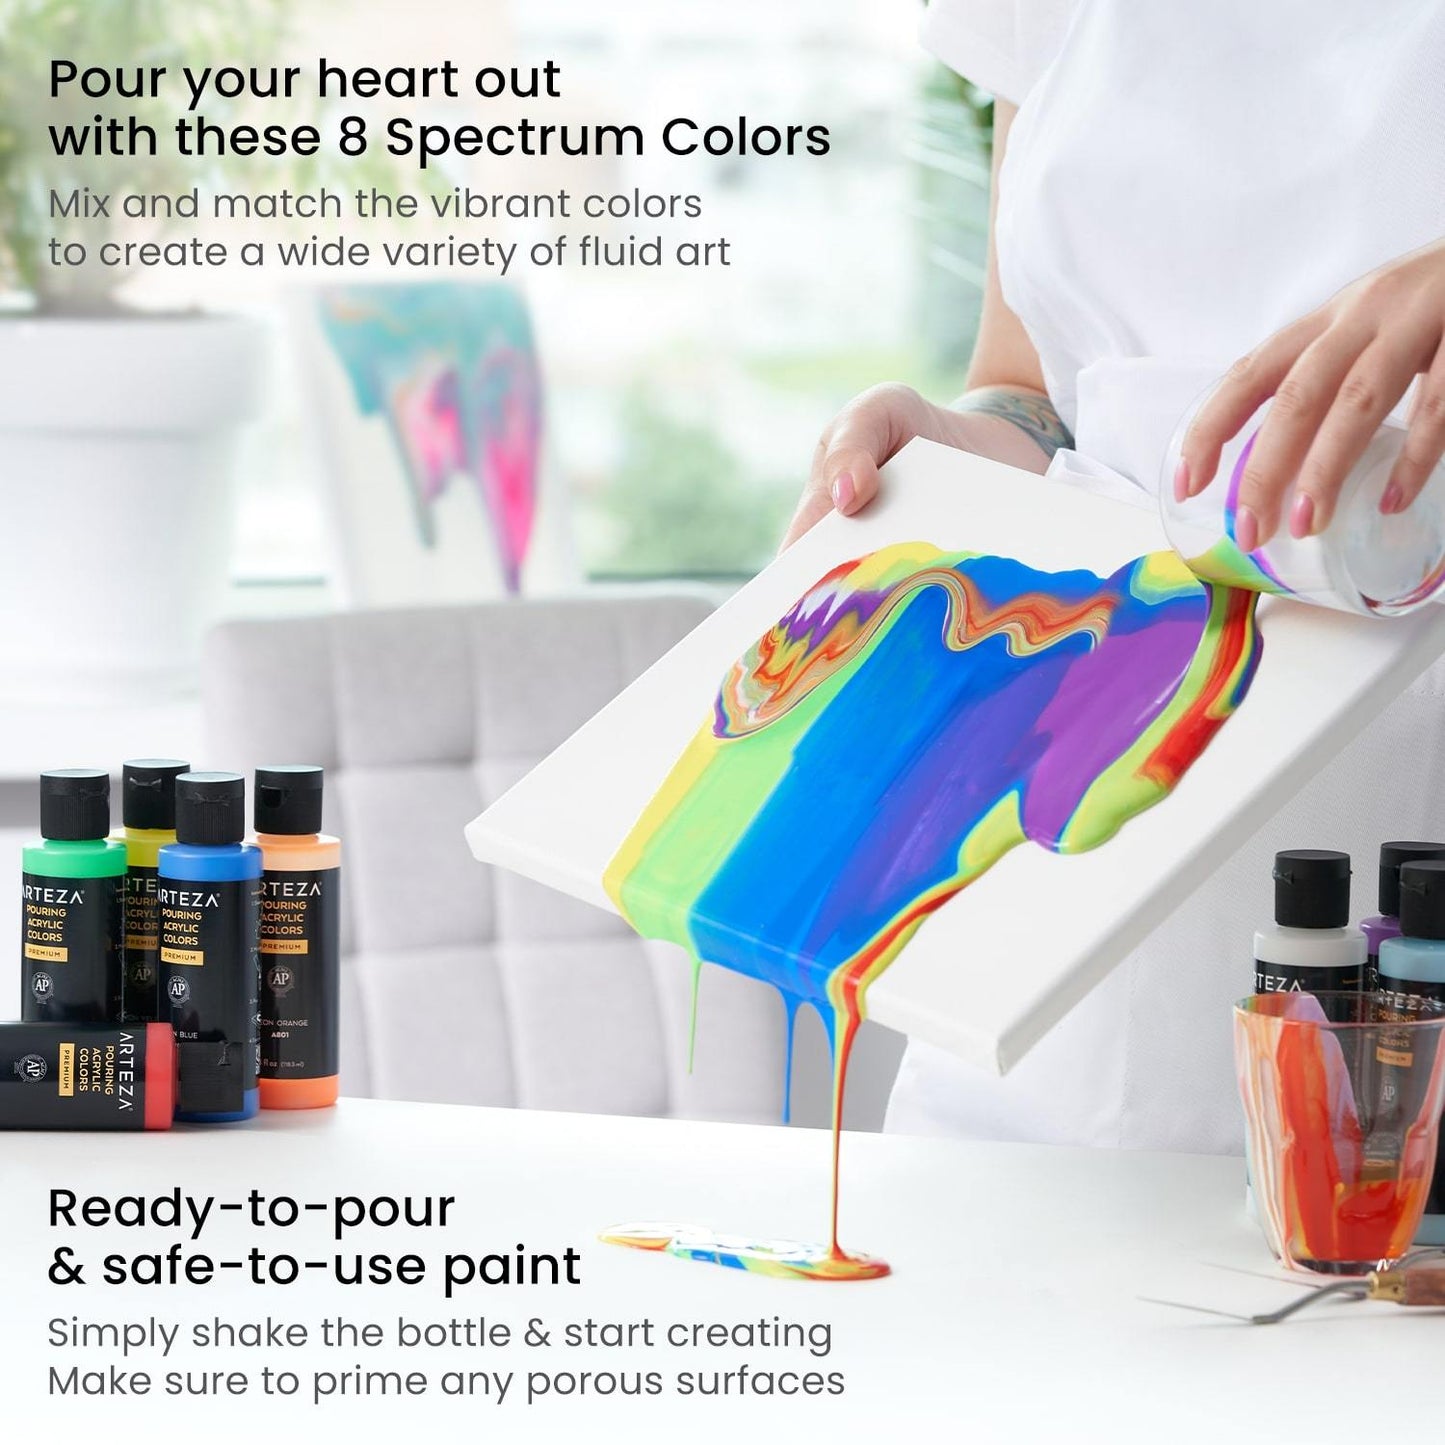 Pouring Acrylic Paint, Rainbow Spectrum Tones, 4oz Bottles - Set of 8